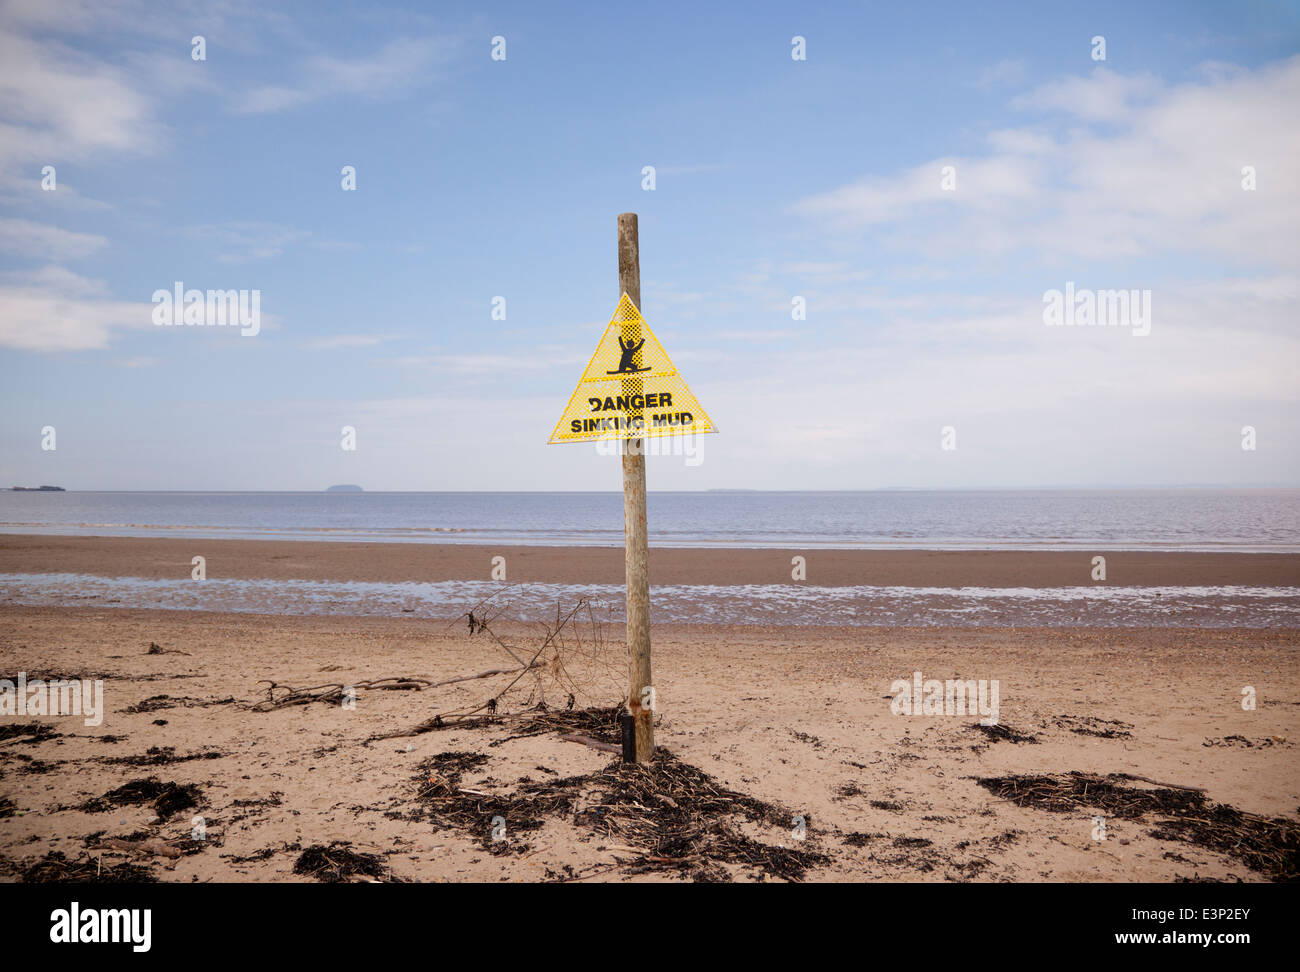 Danger sinking mud sign, Sand Bay, Kewstoke, Weston-Super-Mare, Somerset, England, UK Stock Photo